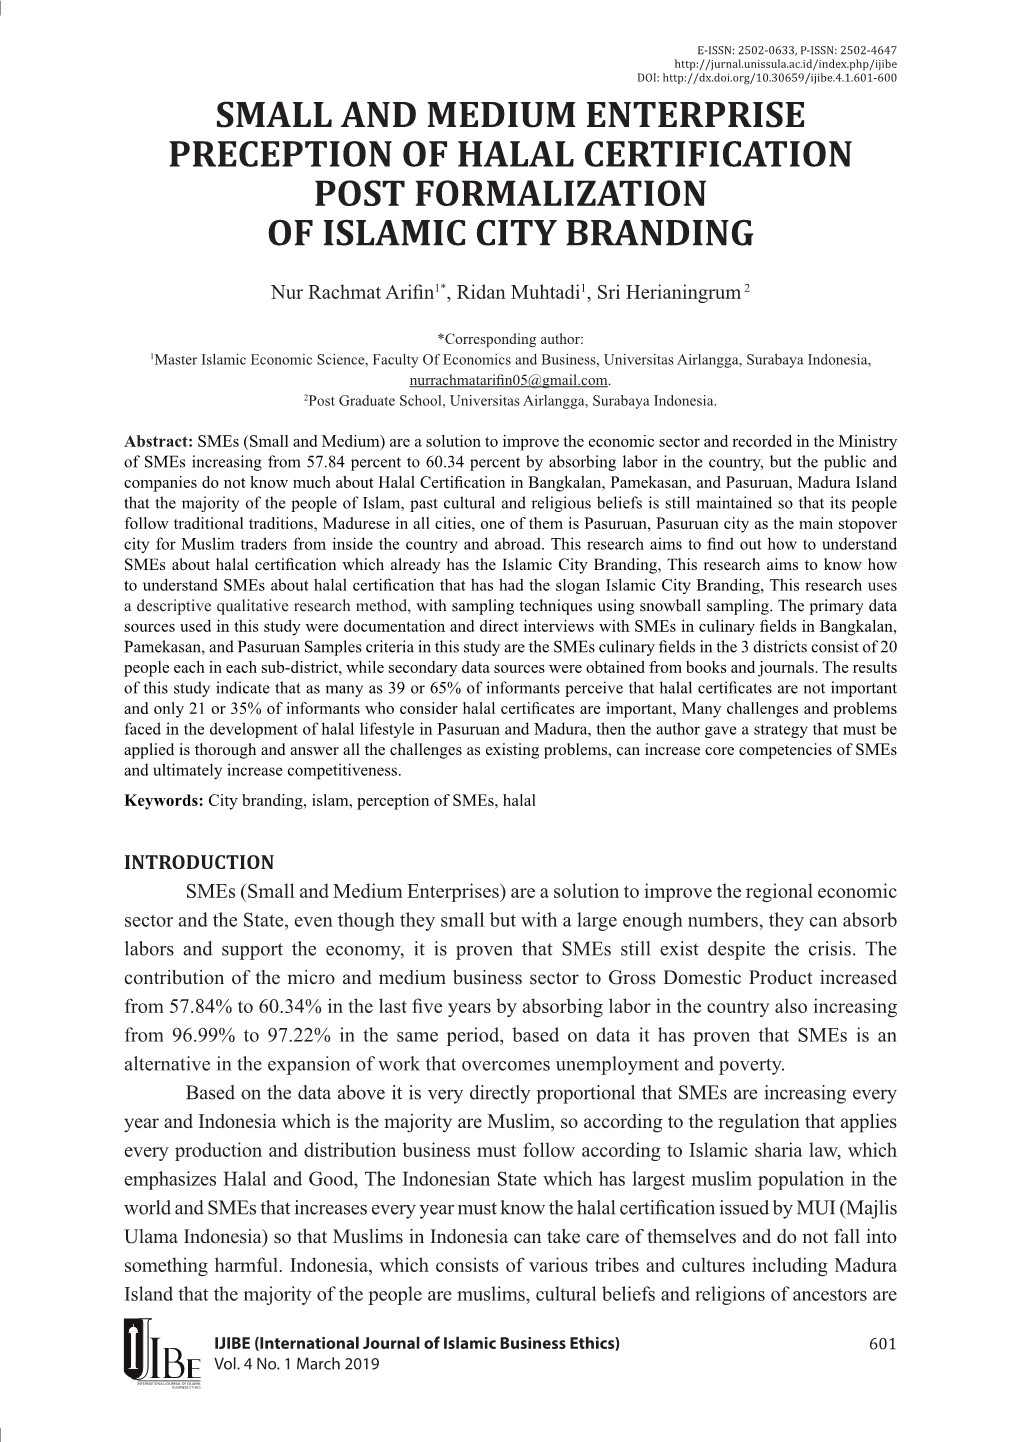 Small and Medium Enterprise Preception of Halal Certification Post Formalization of Islamic City Branding